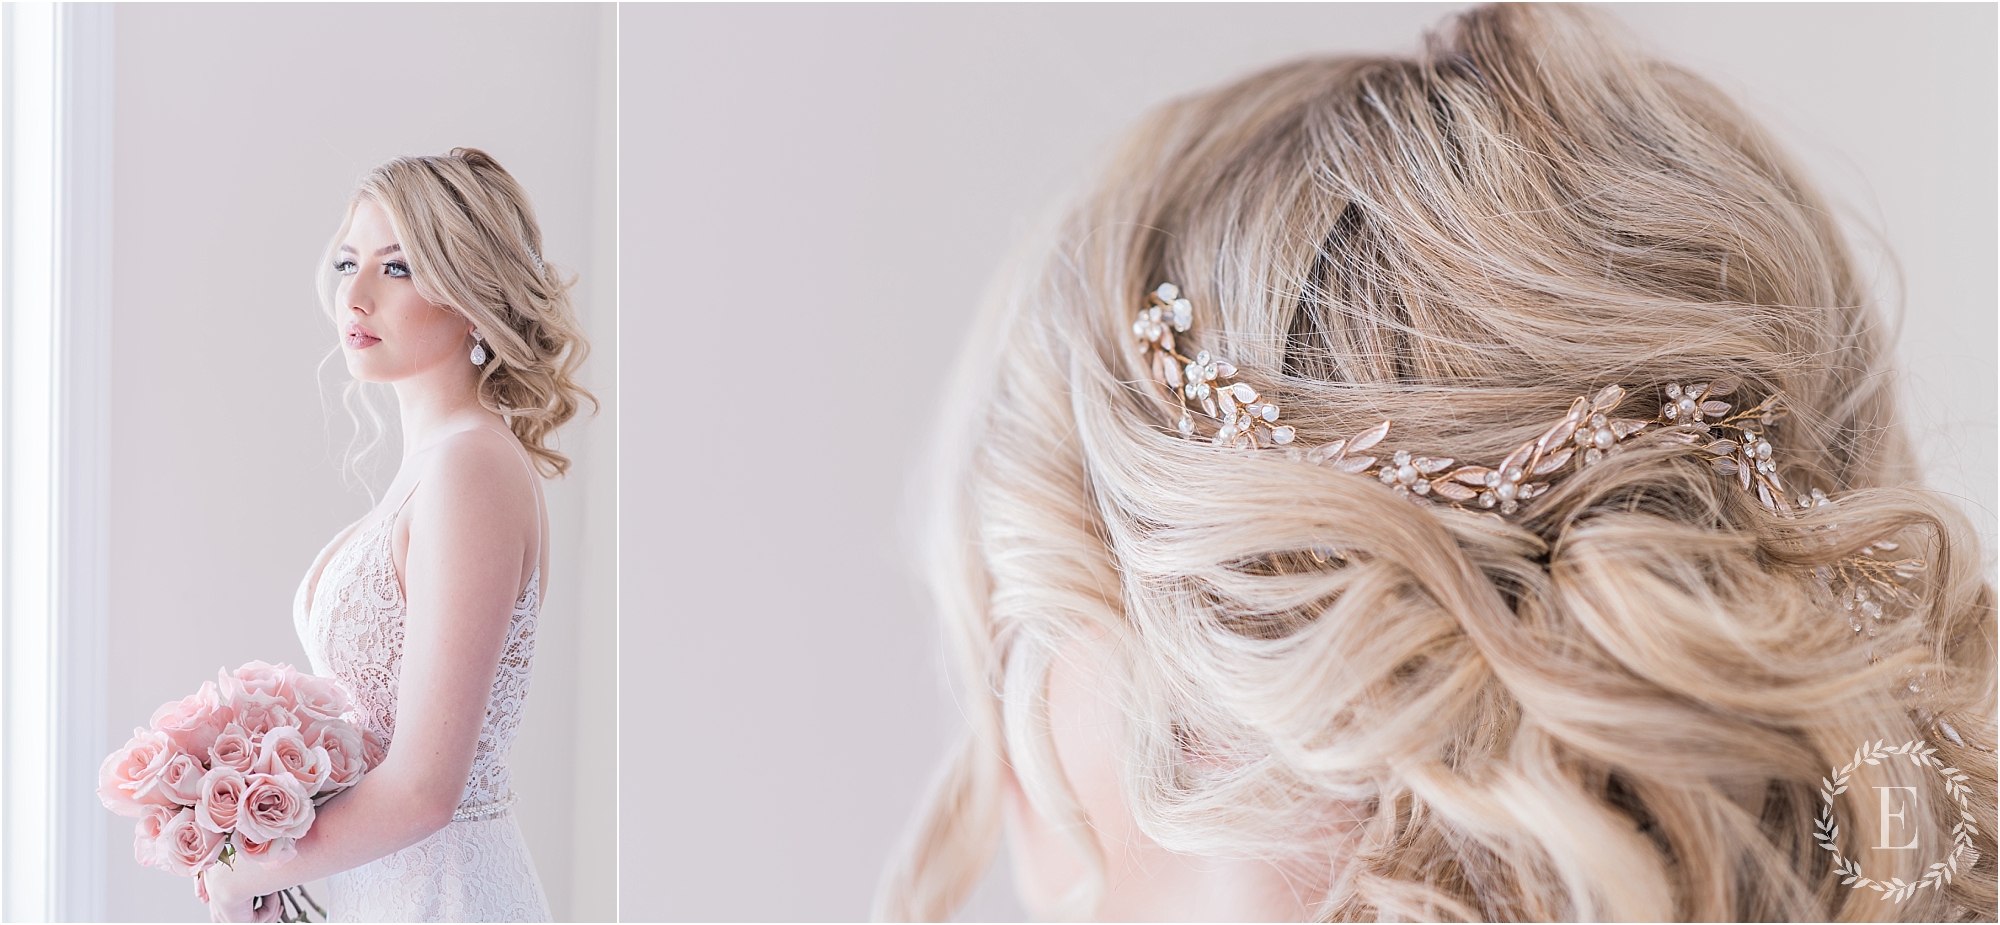 34 Caroline E Modeling Hairpieces Bridal - Photos by Emma_WEB.jpg